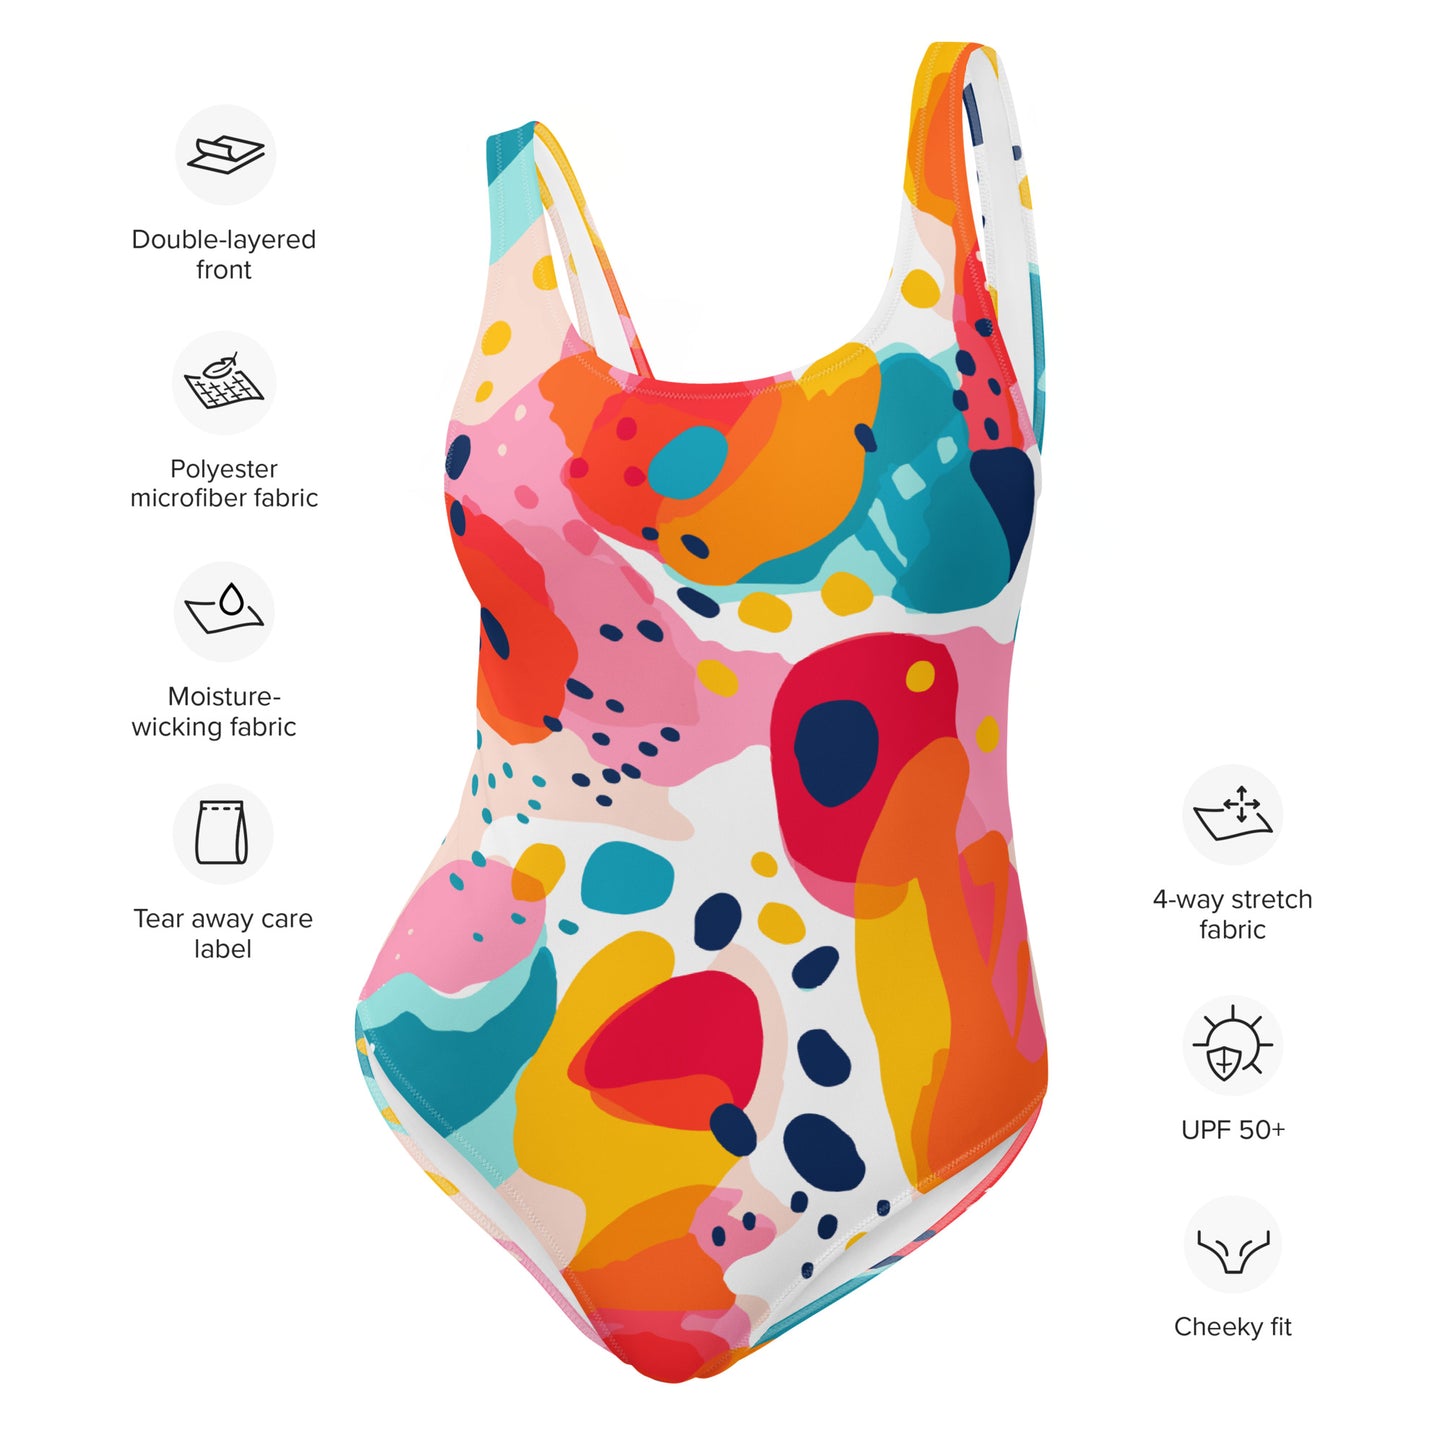 Milano Classic One-Piece Swimsuit